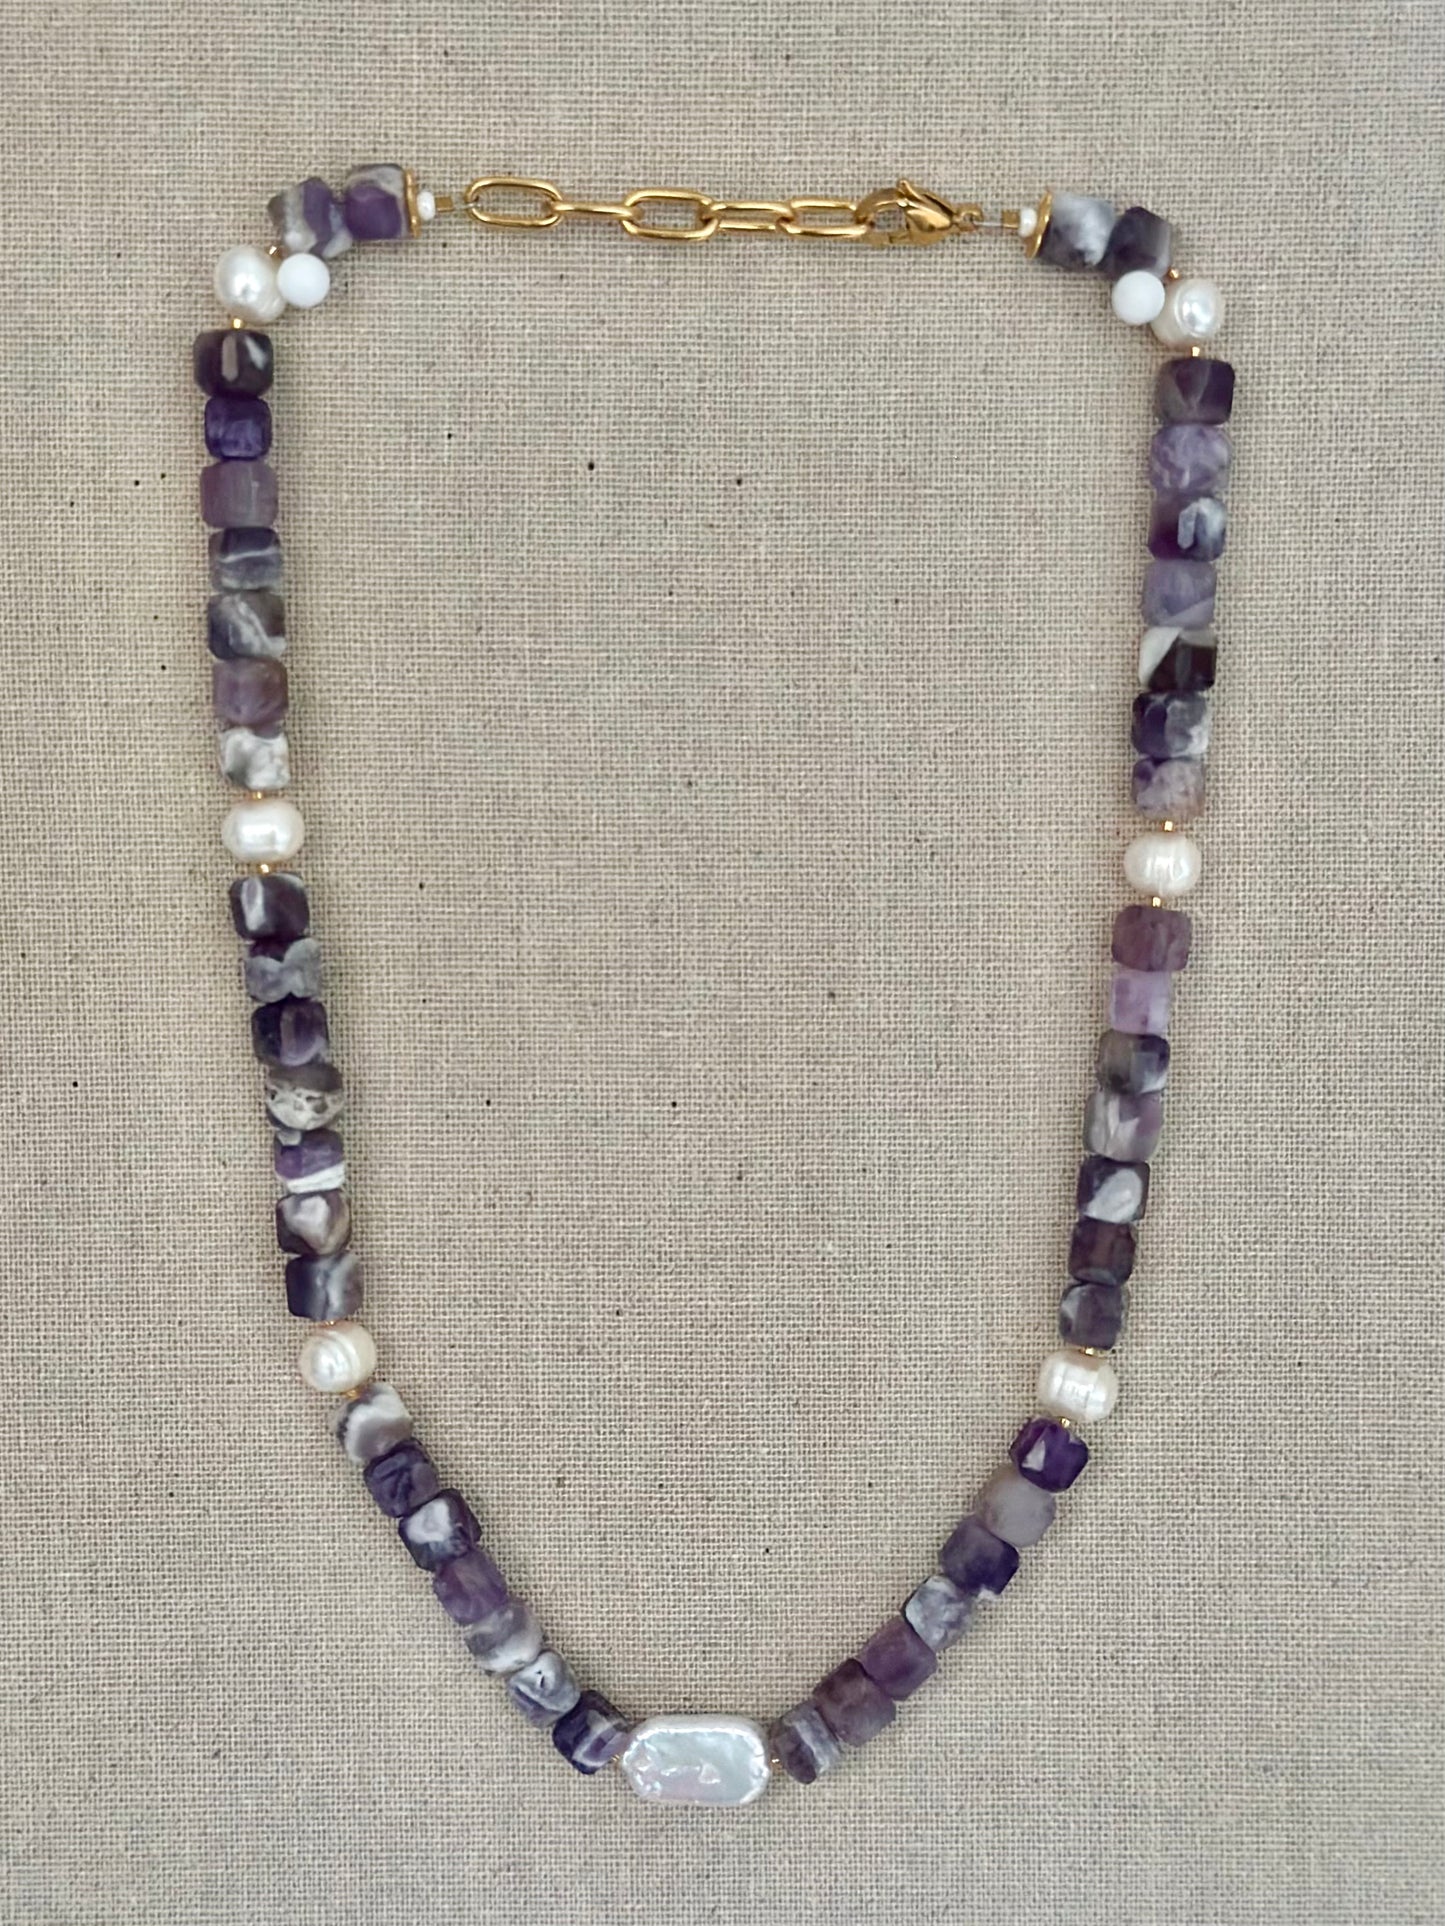 Jane necklace #2 in amethyst